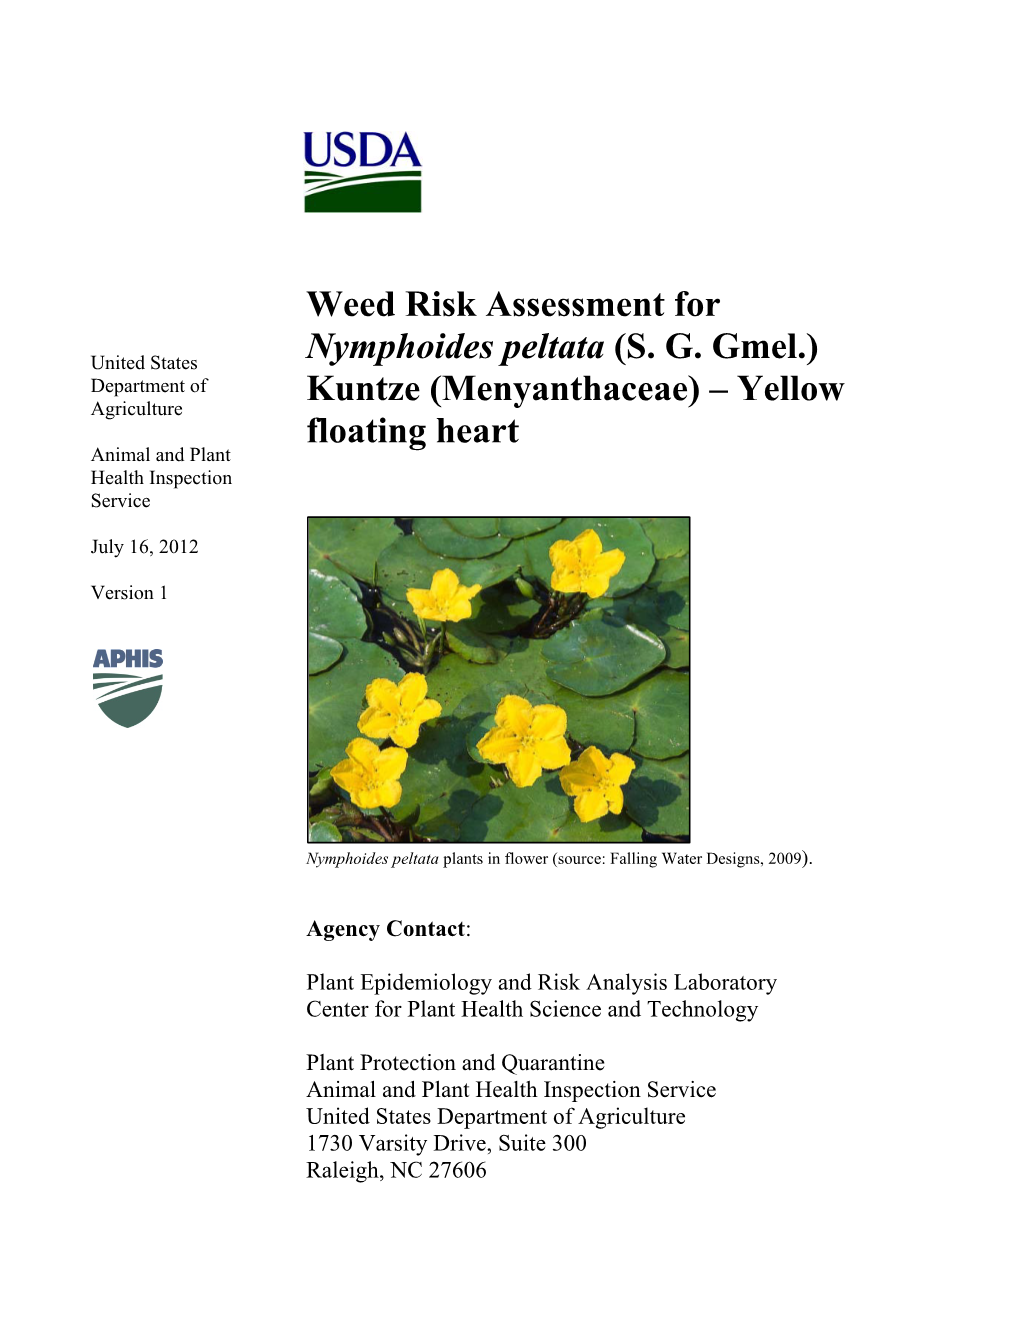 Weed Risk Assessment for Nymphoides Peltata (SG Gmel.)